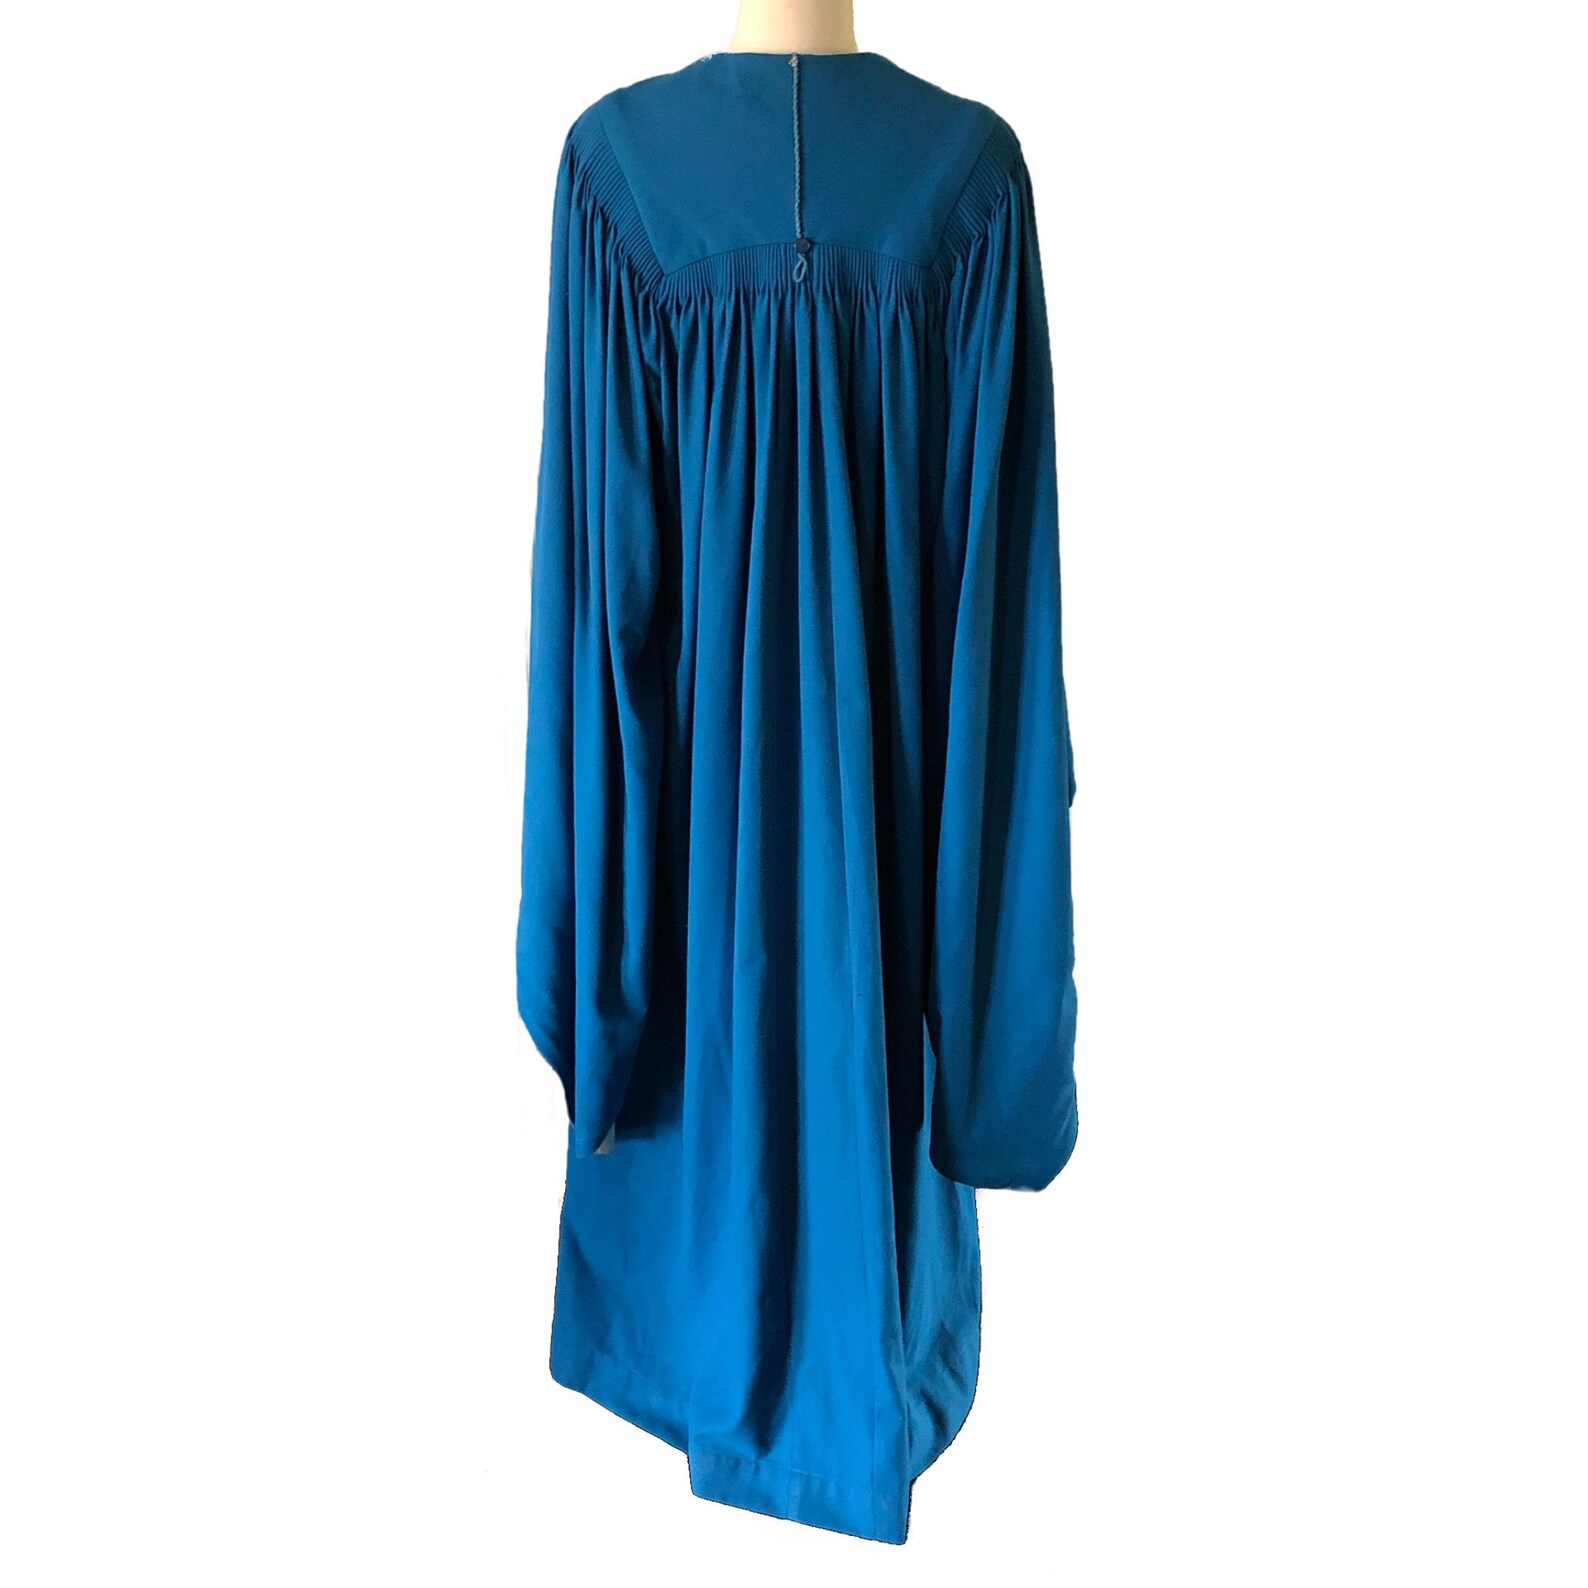 Vintage graduation gown choir robe blue angel sleeves | Etsy